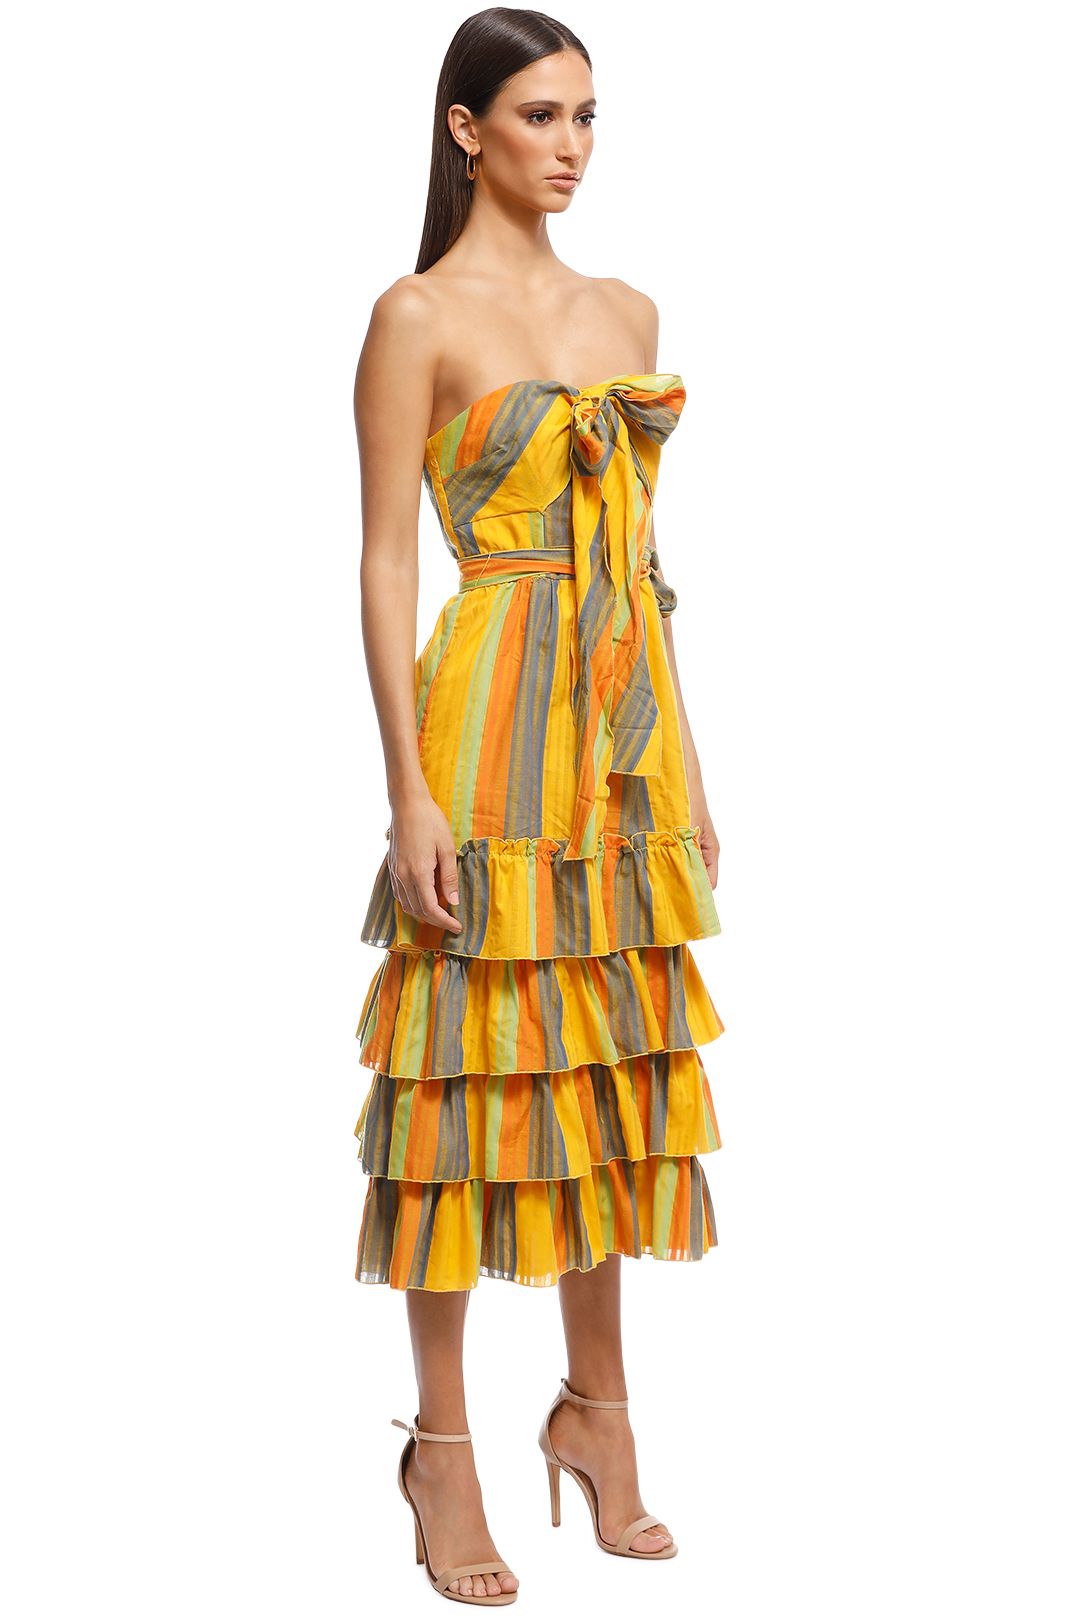 Talulah - Imperial Midi Dress - Yellow Stripes - Side